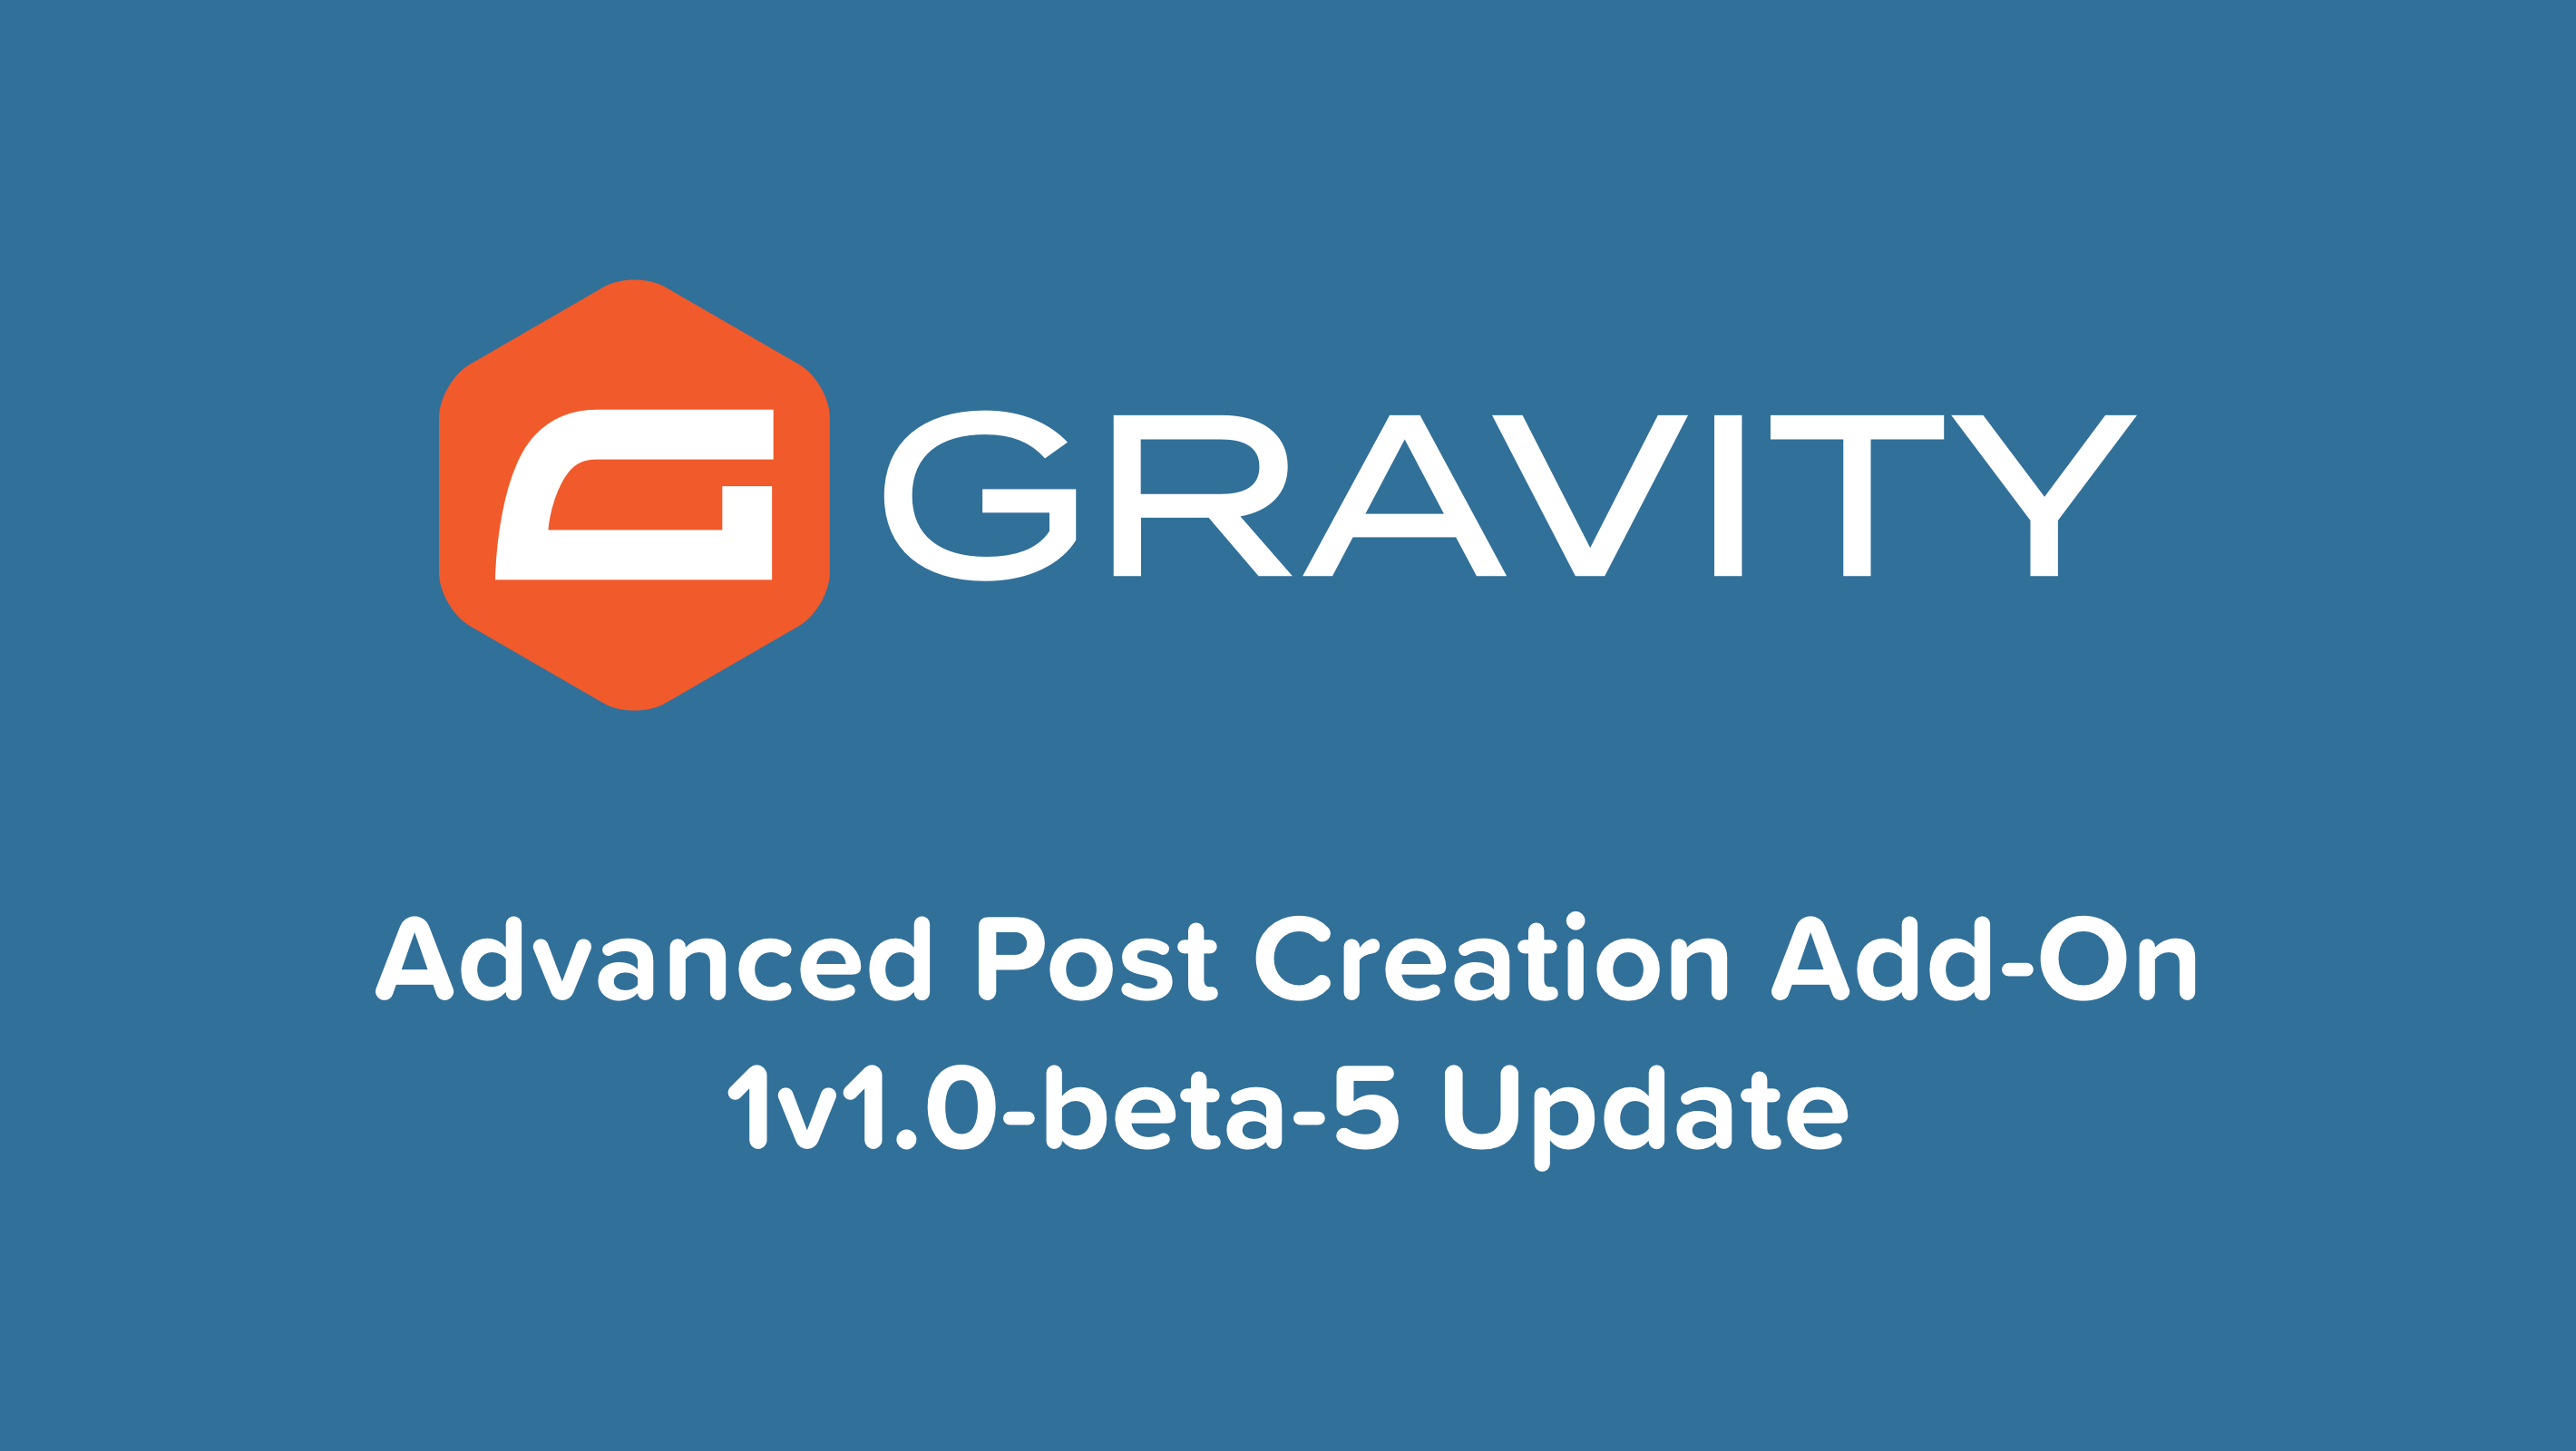 Advanced Post Creation Add-On 1v1.0-beta-5 Update